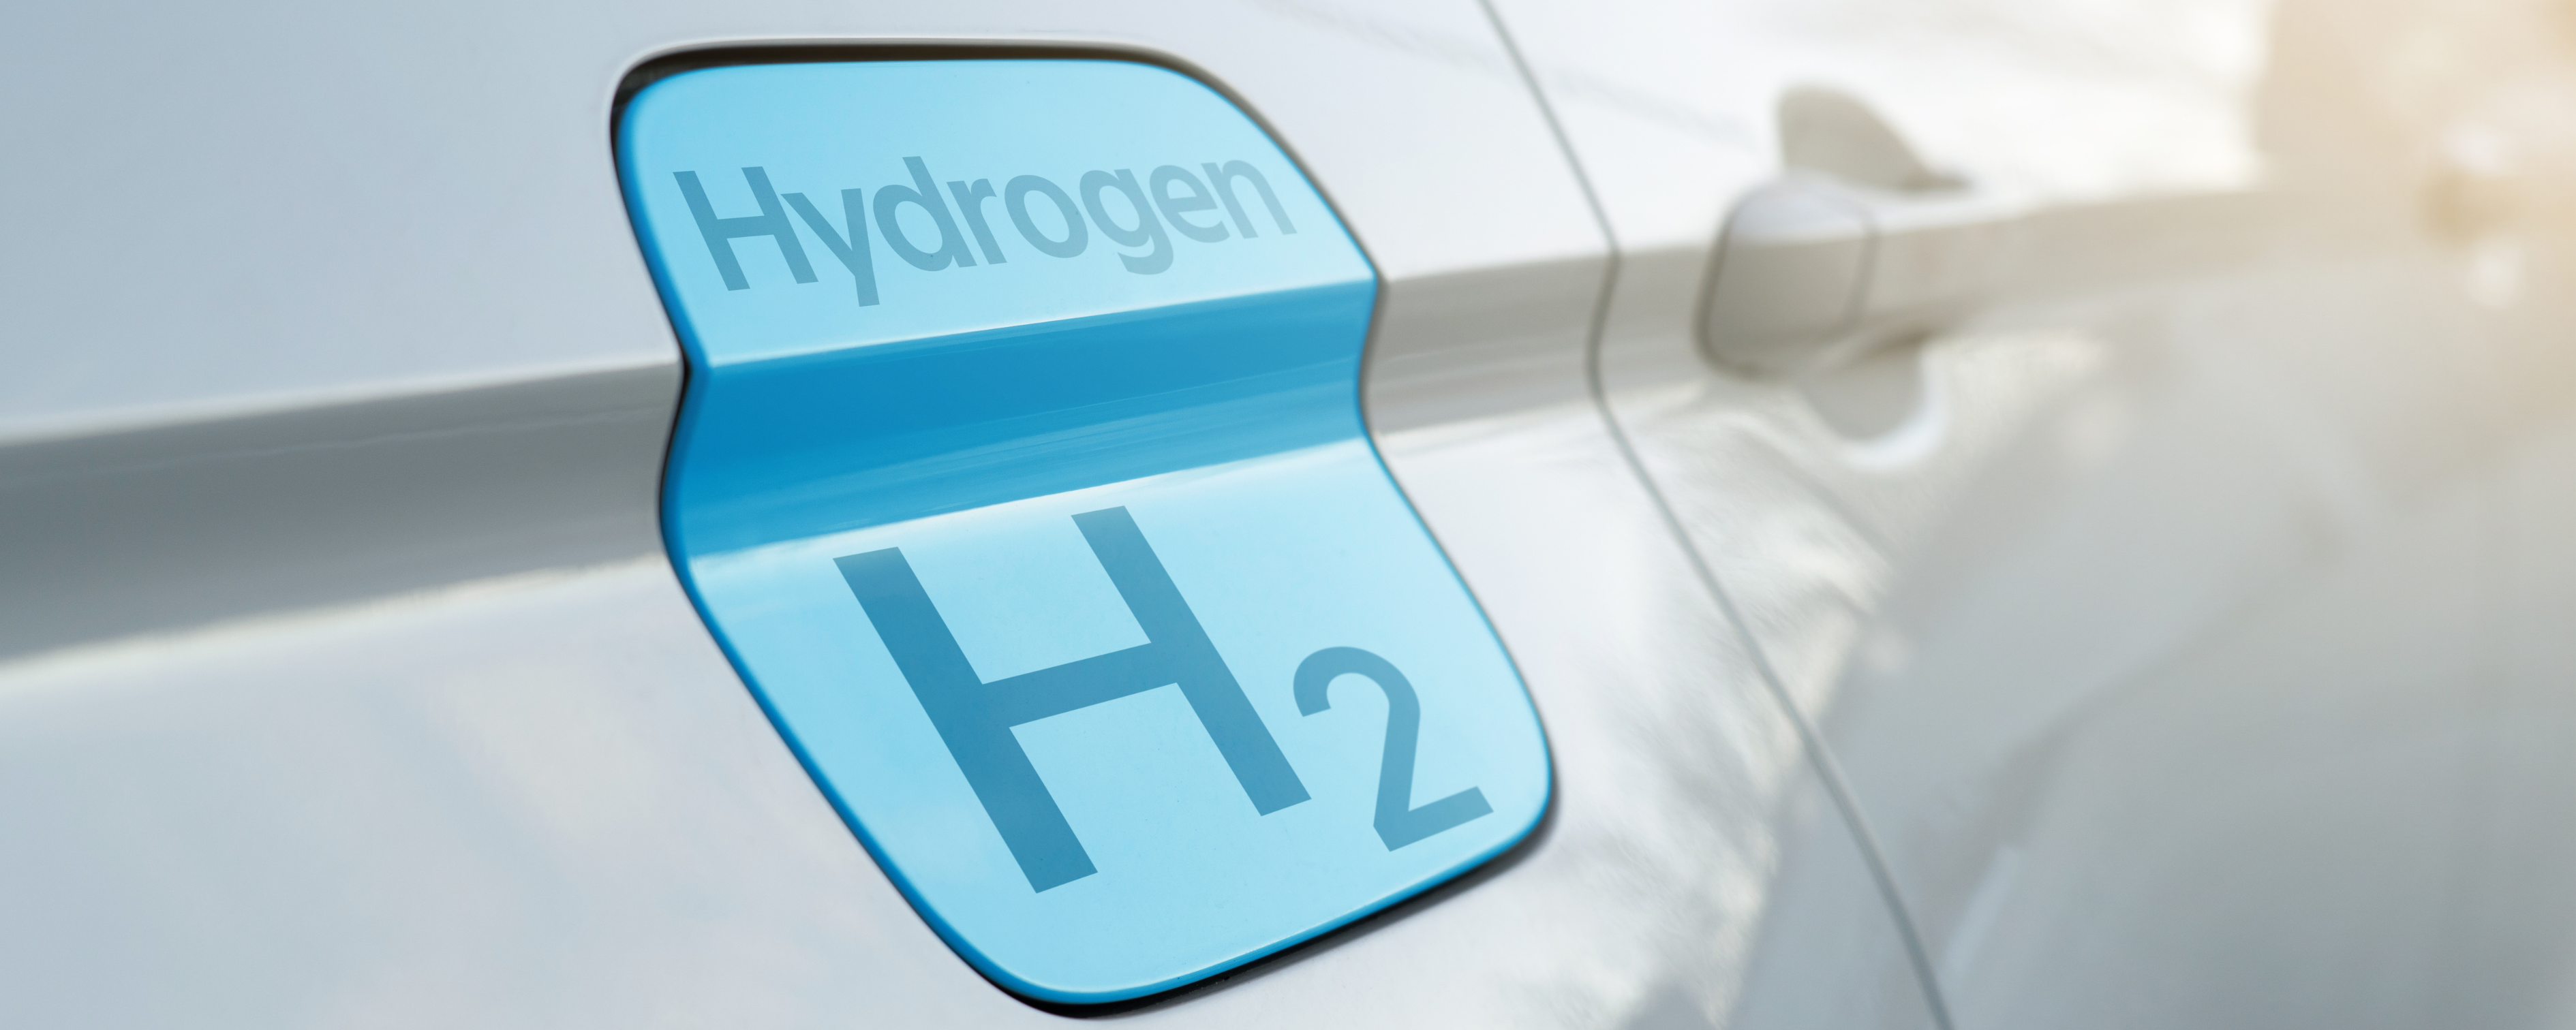 combustible hidrogeno